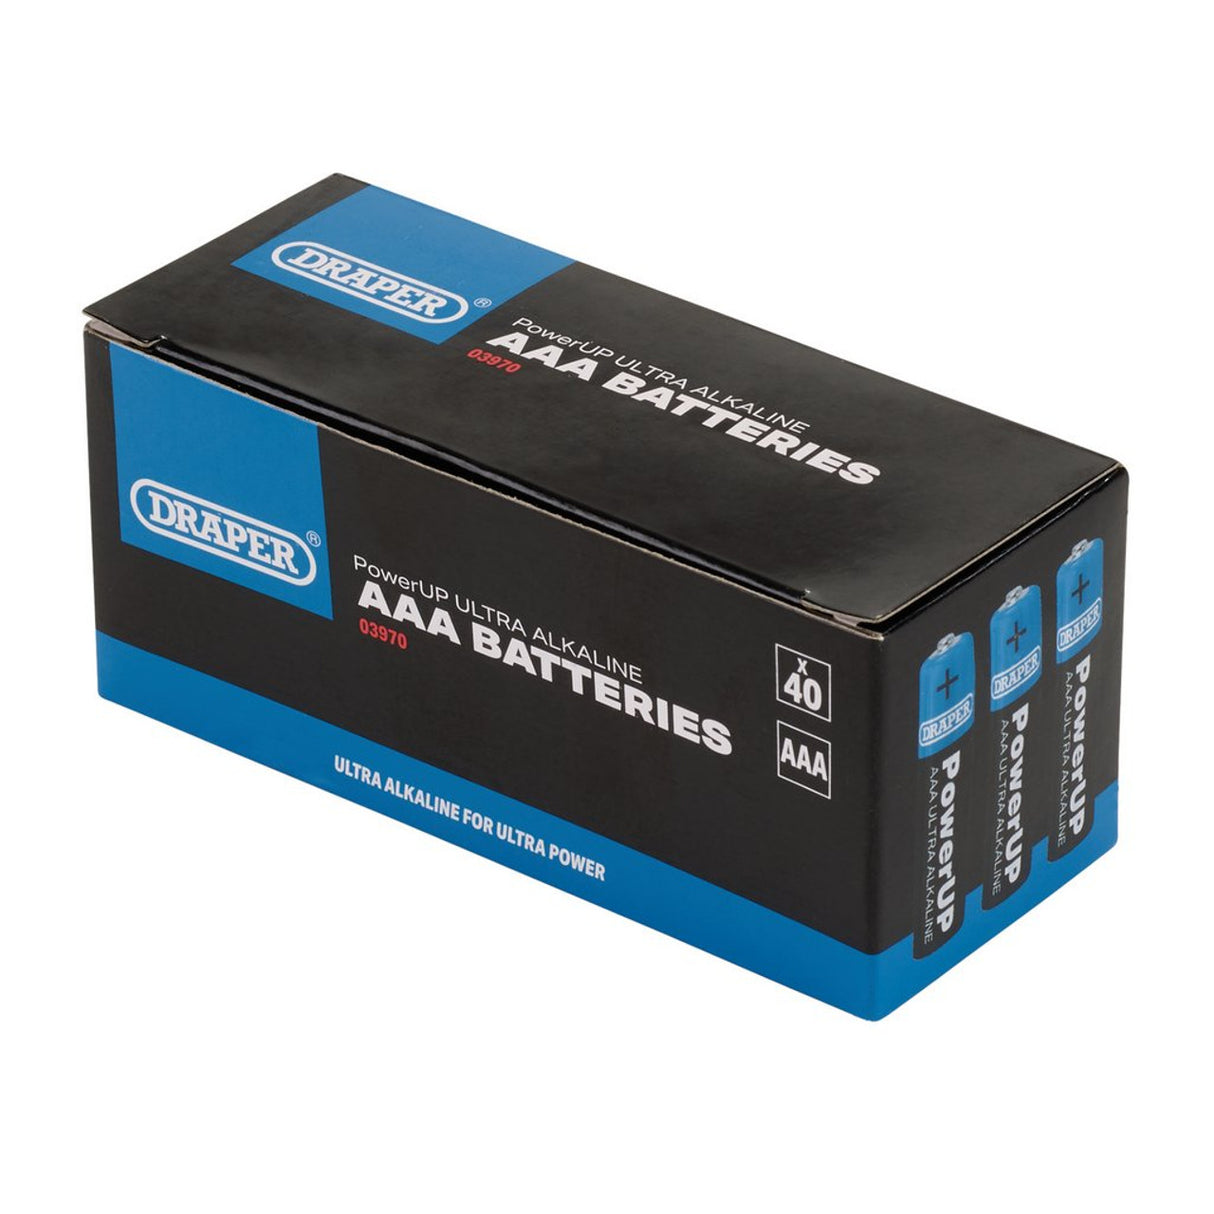 Draper Tools Powerup Ultra Alkaline AAA Batteries (Pack Of 40)